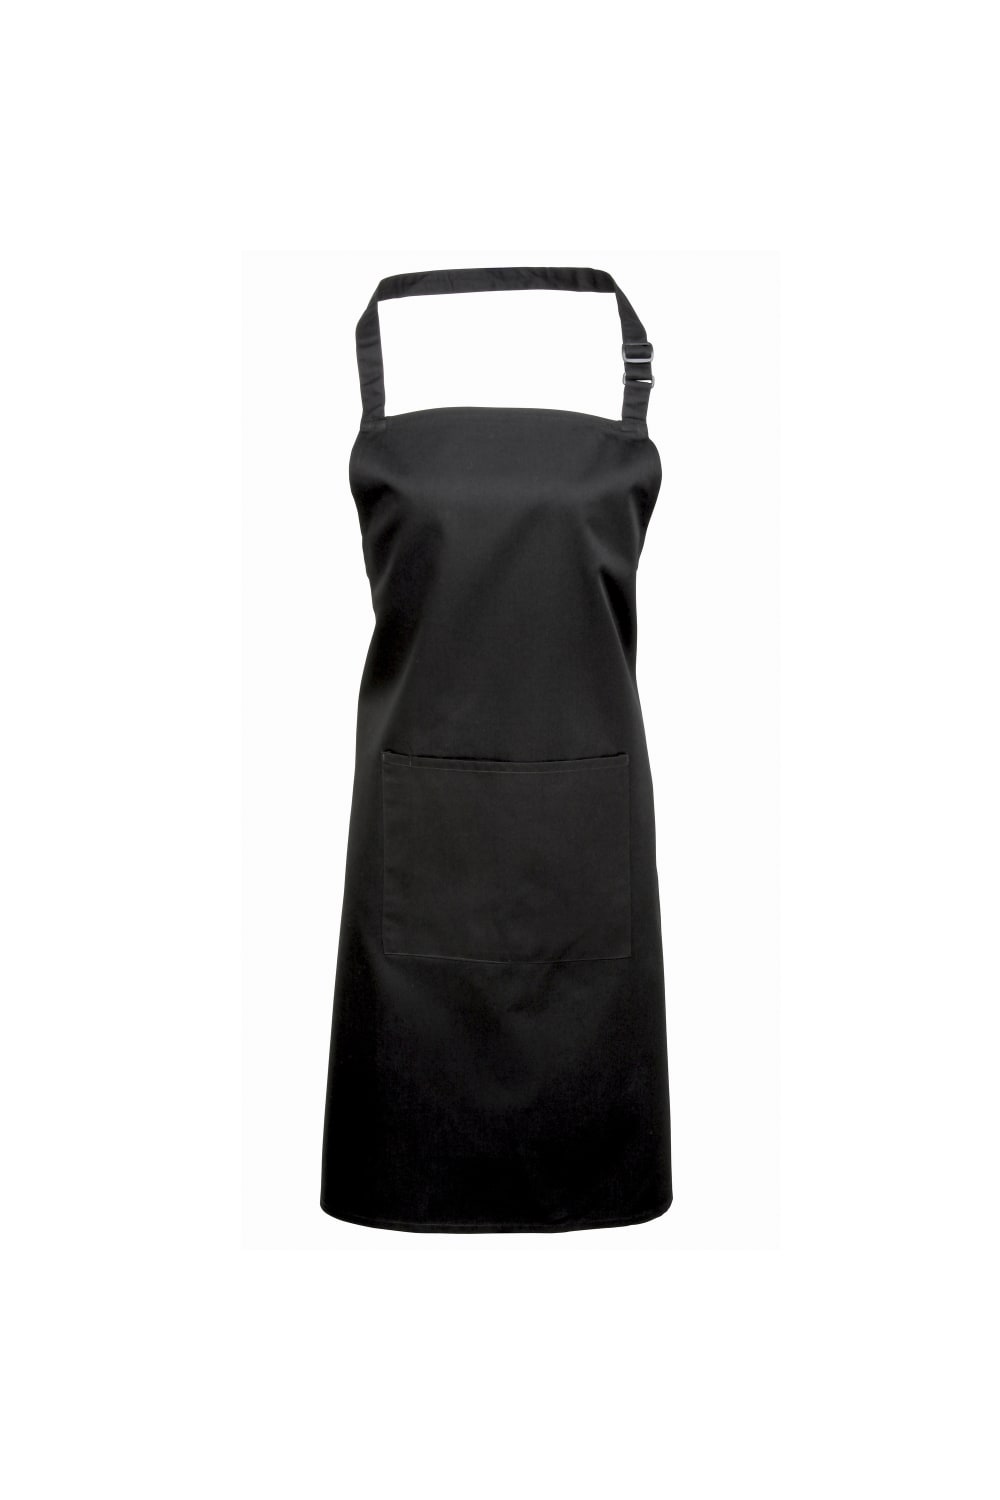 Premier Ladies/Womens Colours Bip Apron With Pocket / Workwear (Black) (One Size)